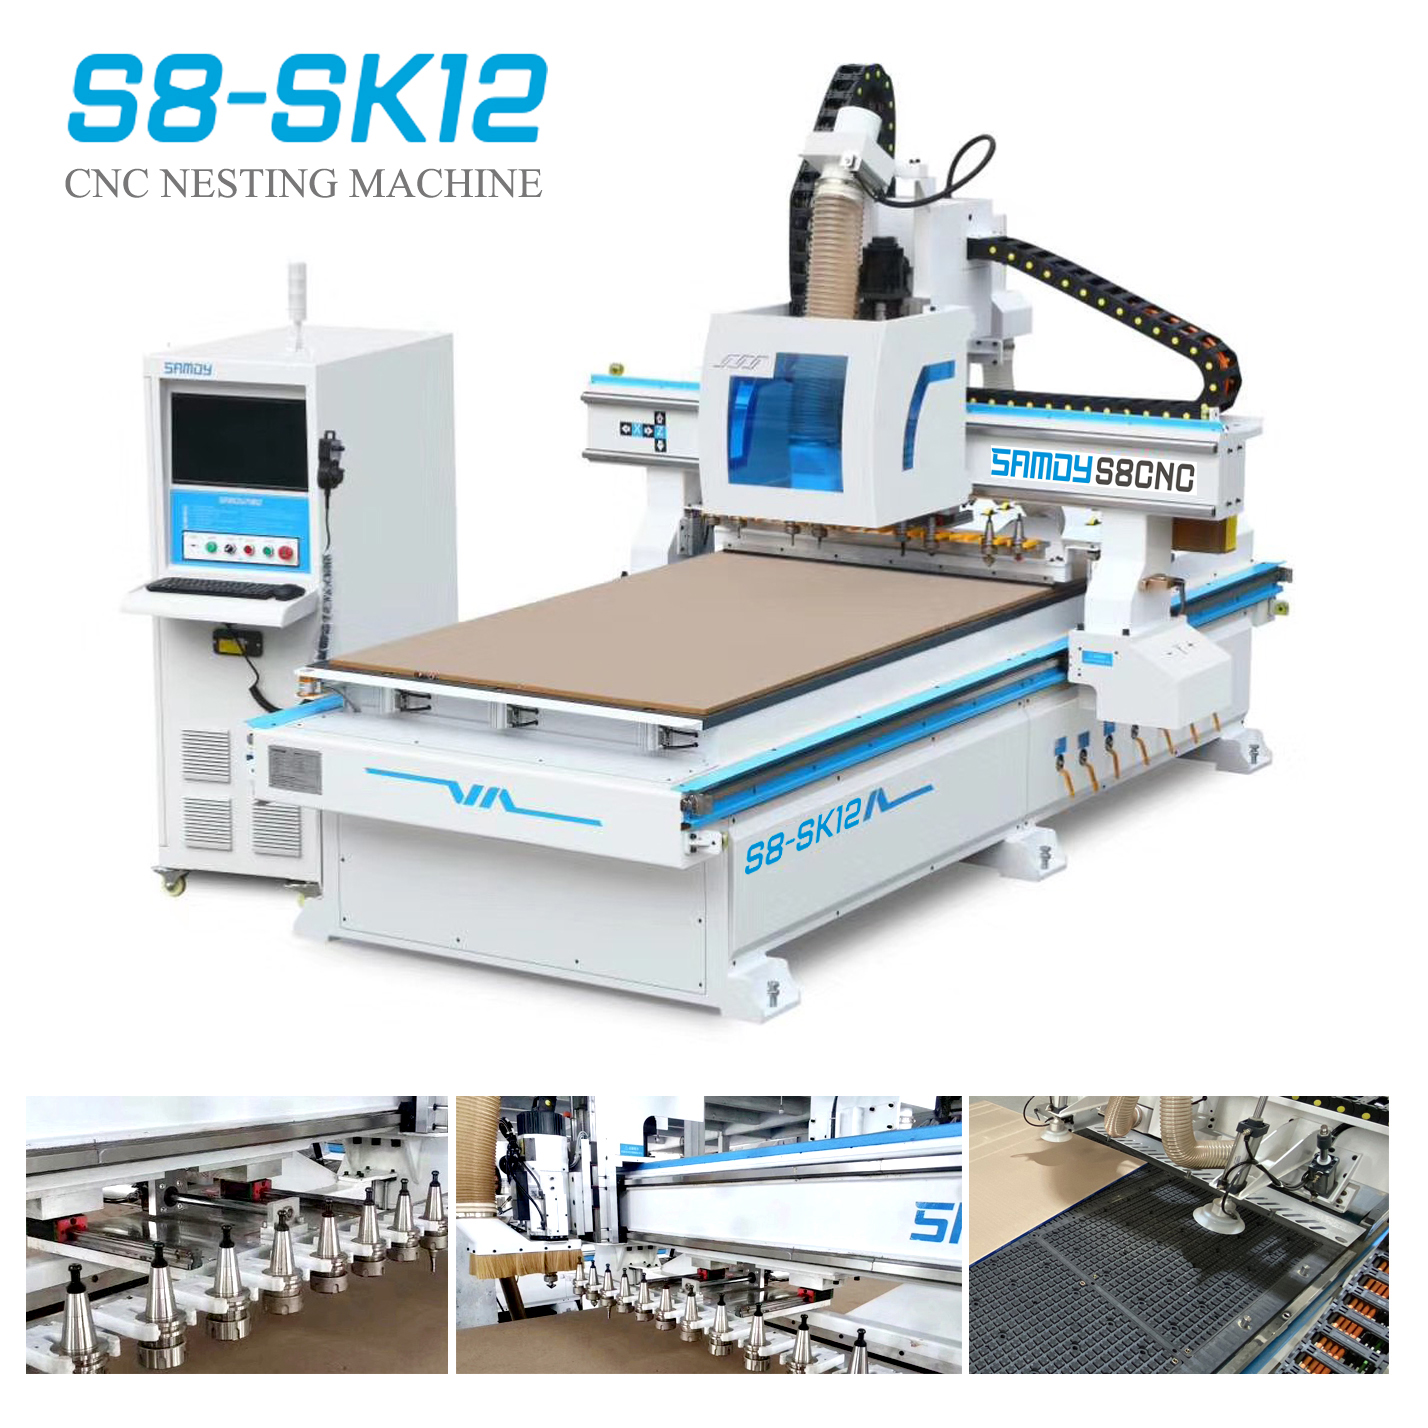 CNC Nesting S8 - SK12